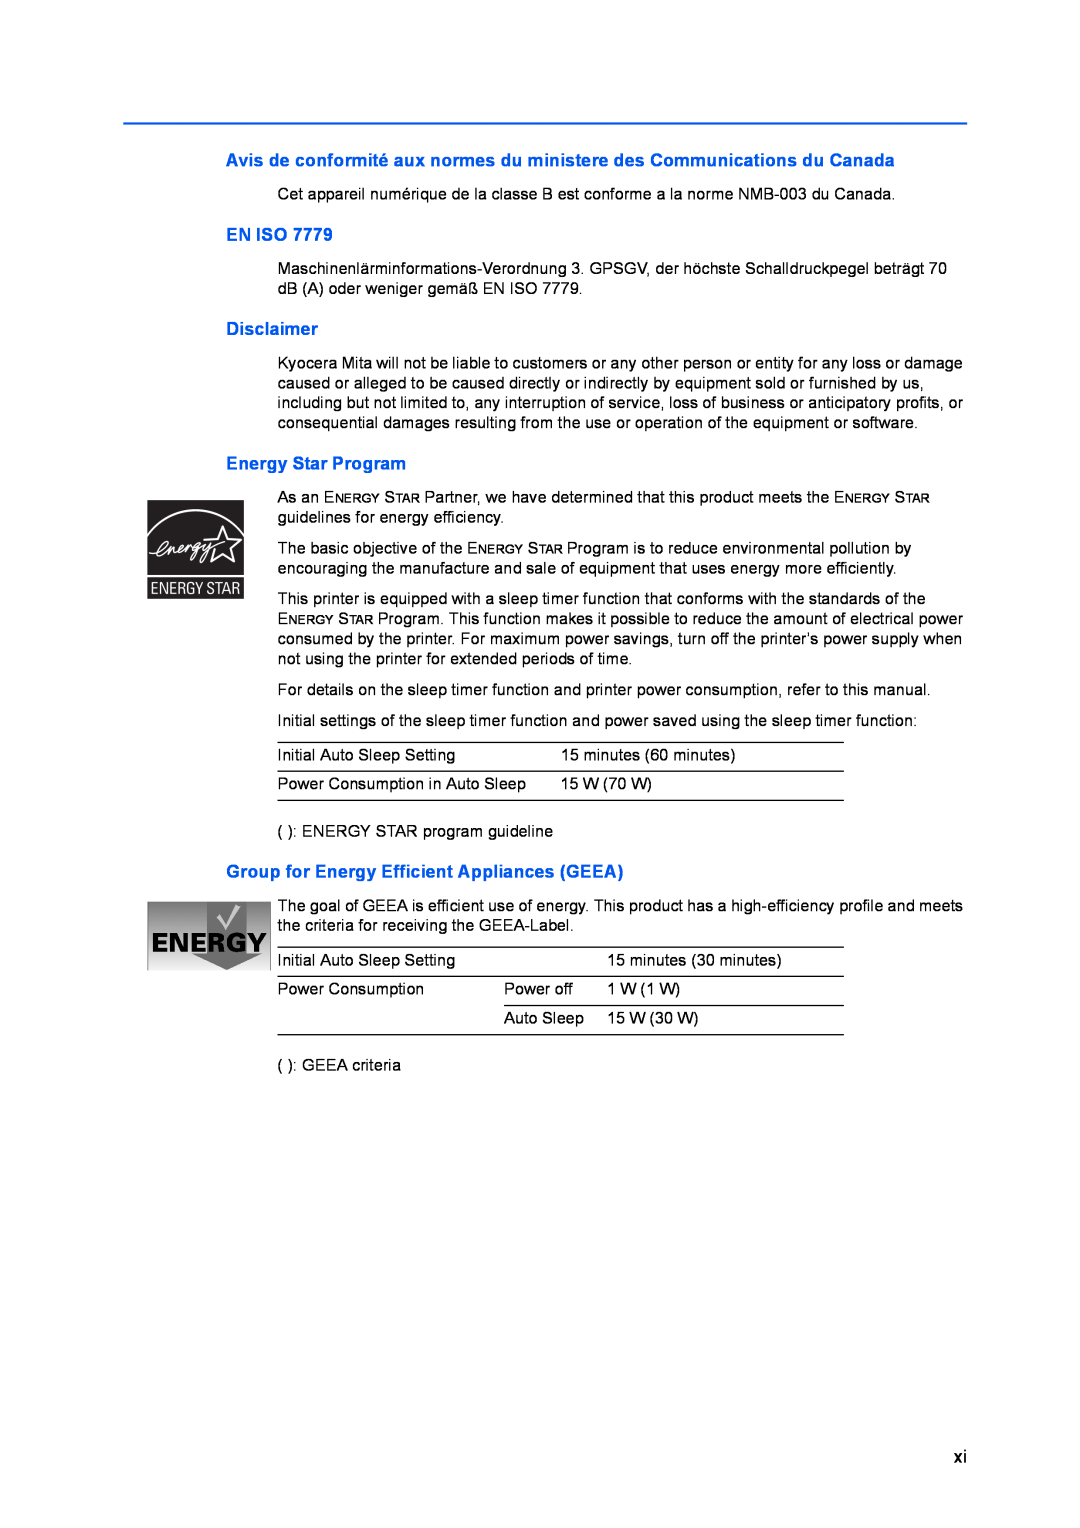 Kyocera FS-C8100DN manual En Iso, Disclaimer, Energy Star Program, Group for Energy Efficient Appliances GEEA 